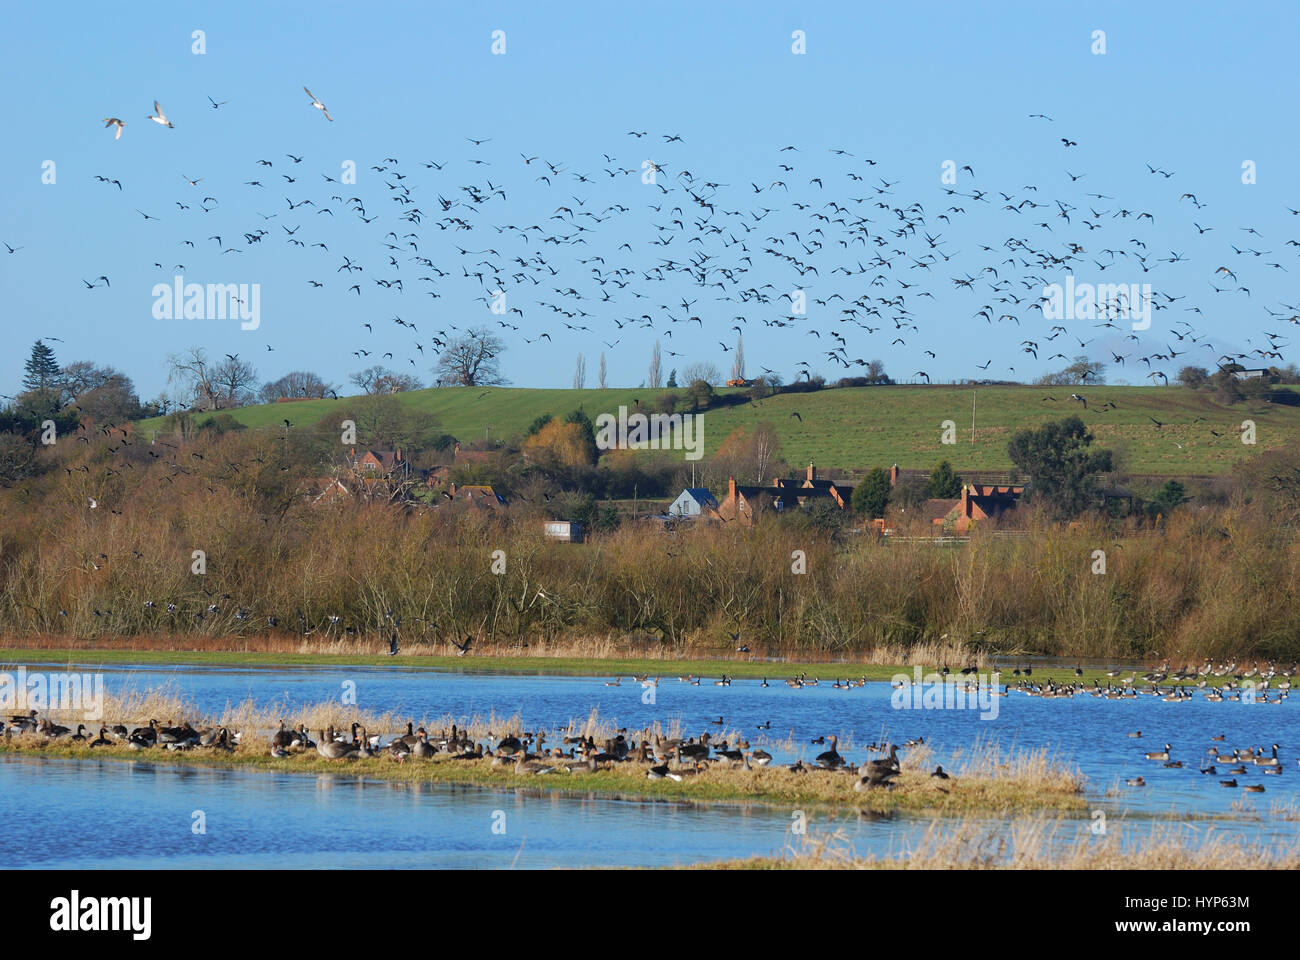 Flying birds in wetland Stock Photo